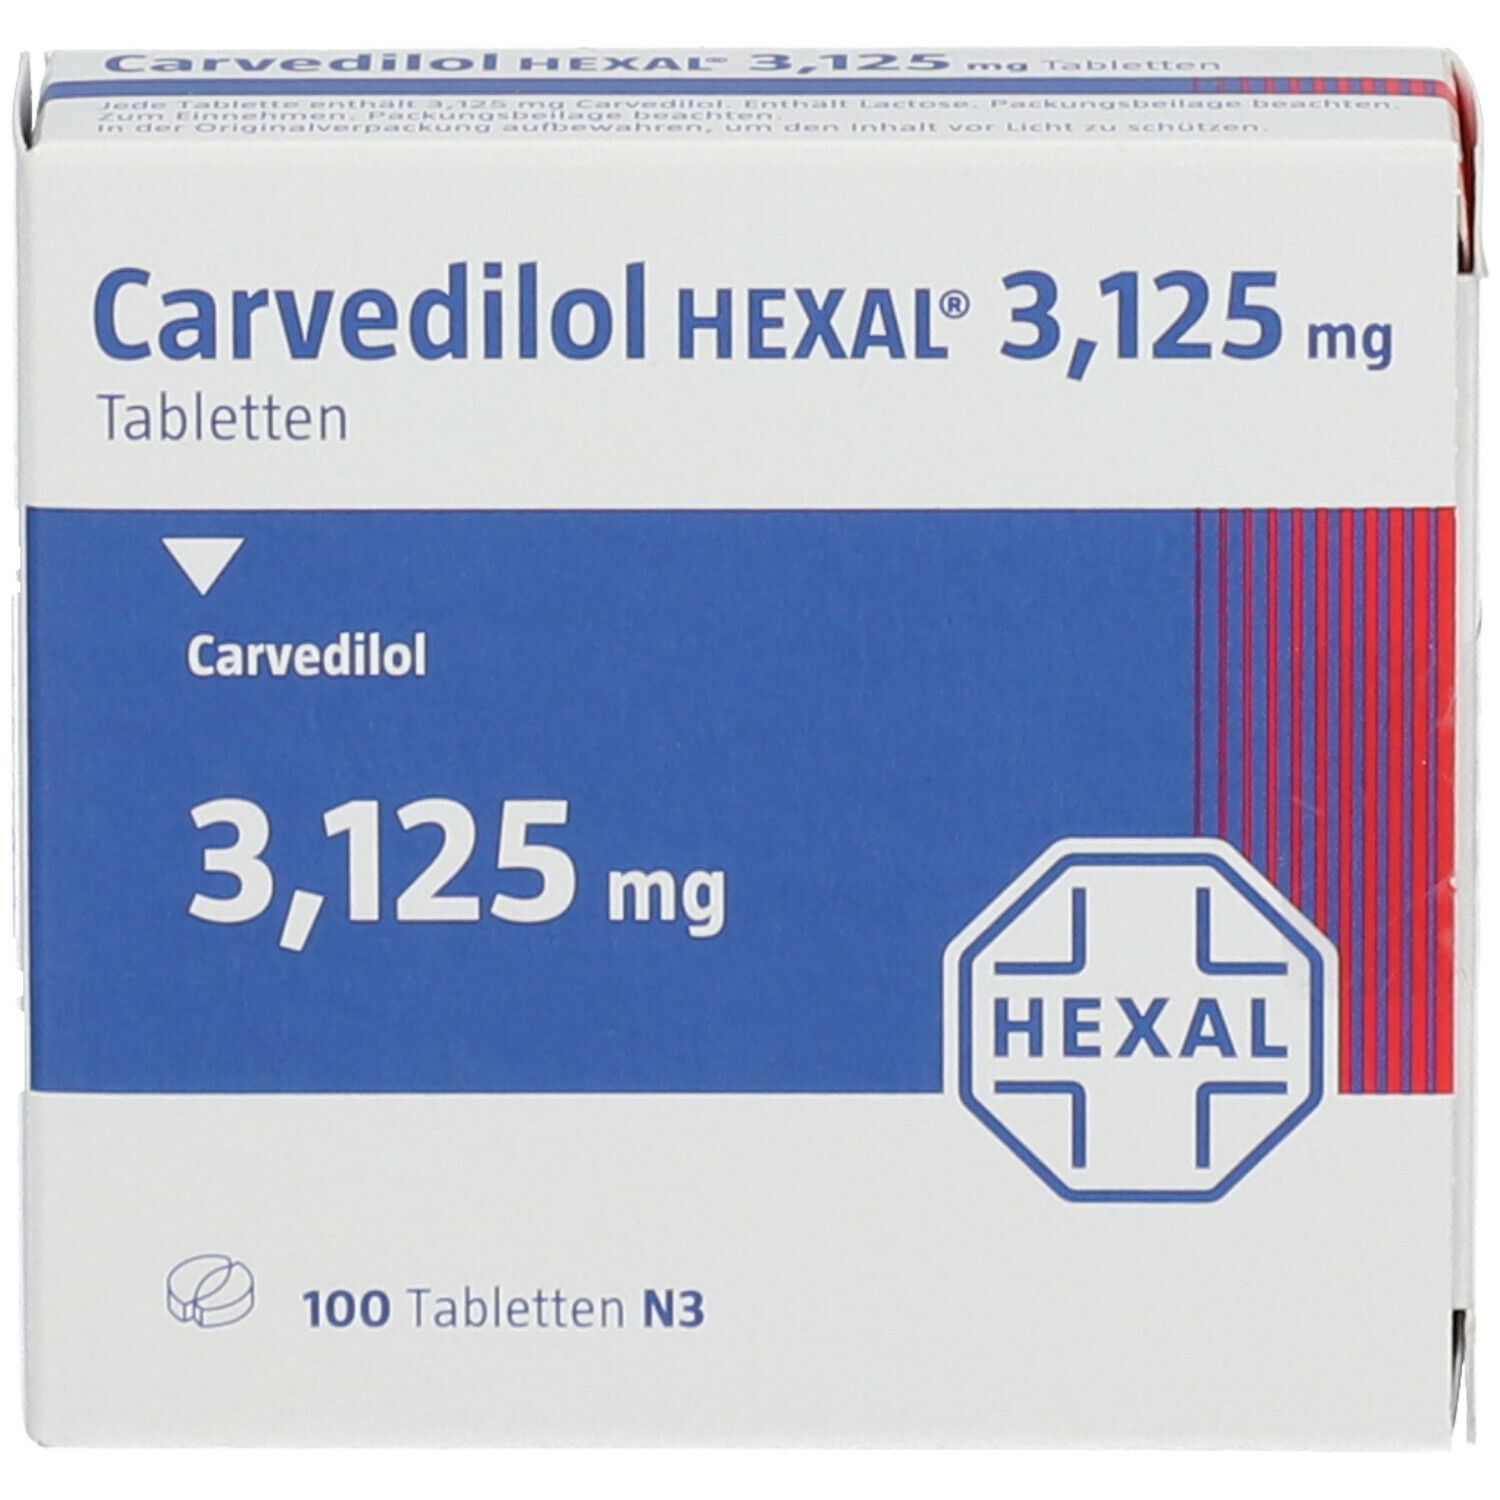 Carvedilol HEXAL® 3,125 mg